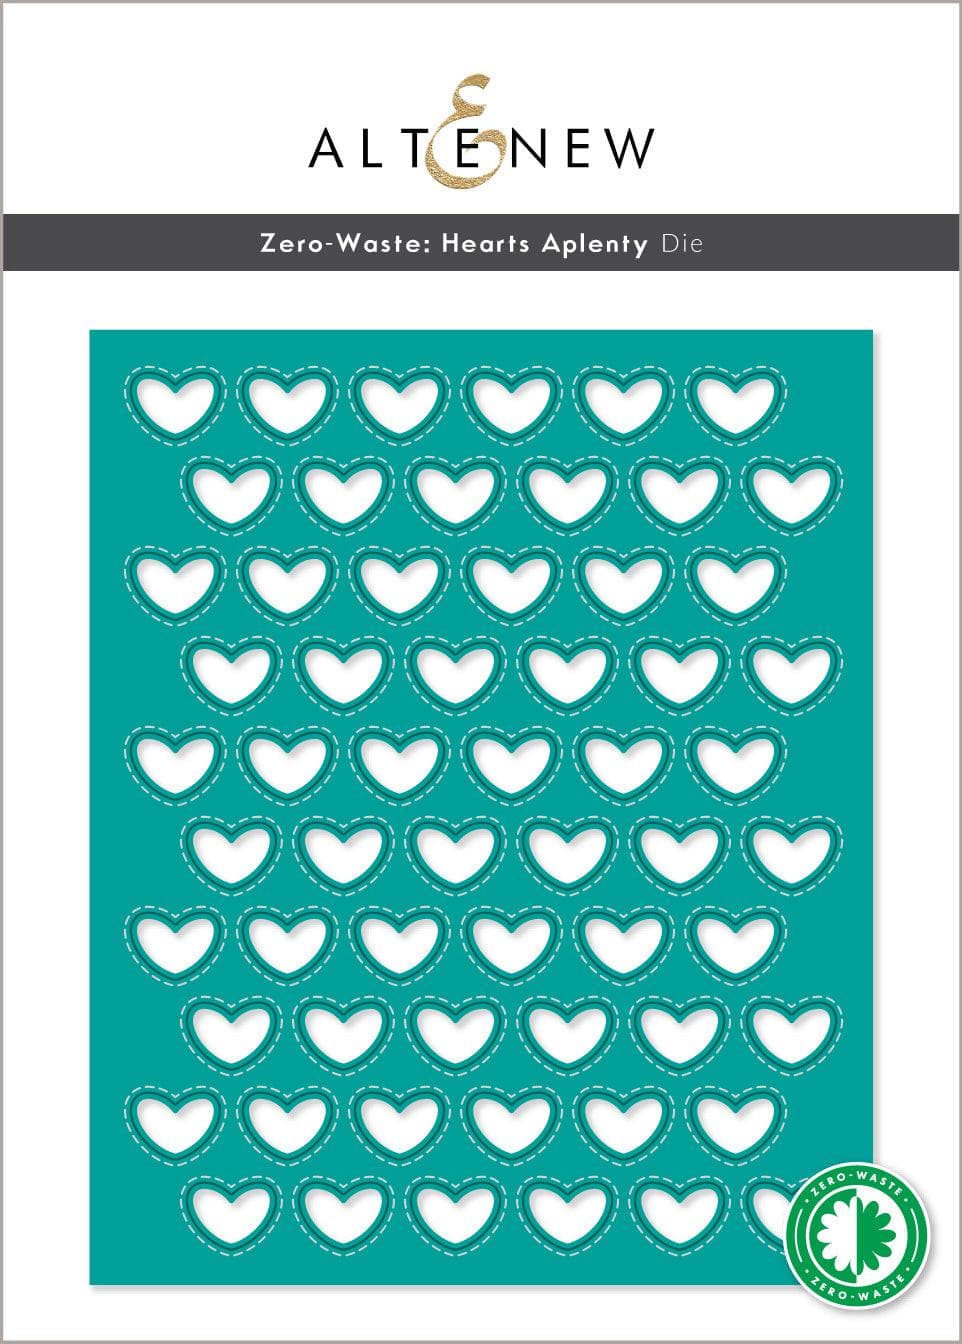 Zero-Waste: Hearts Aplenty